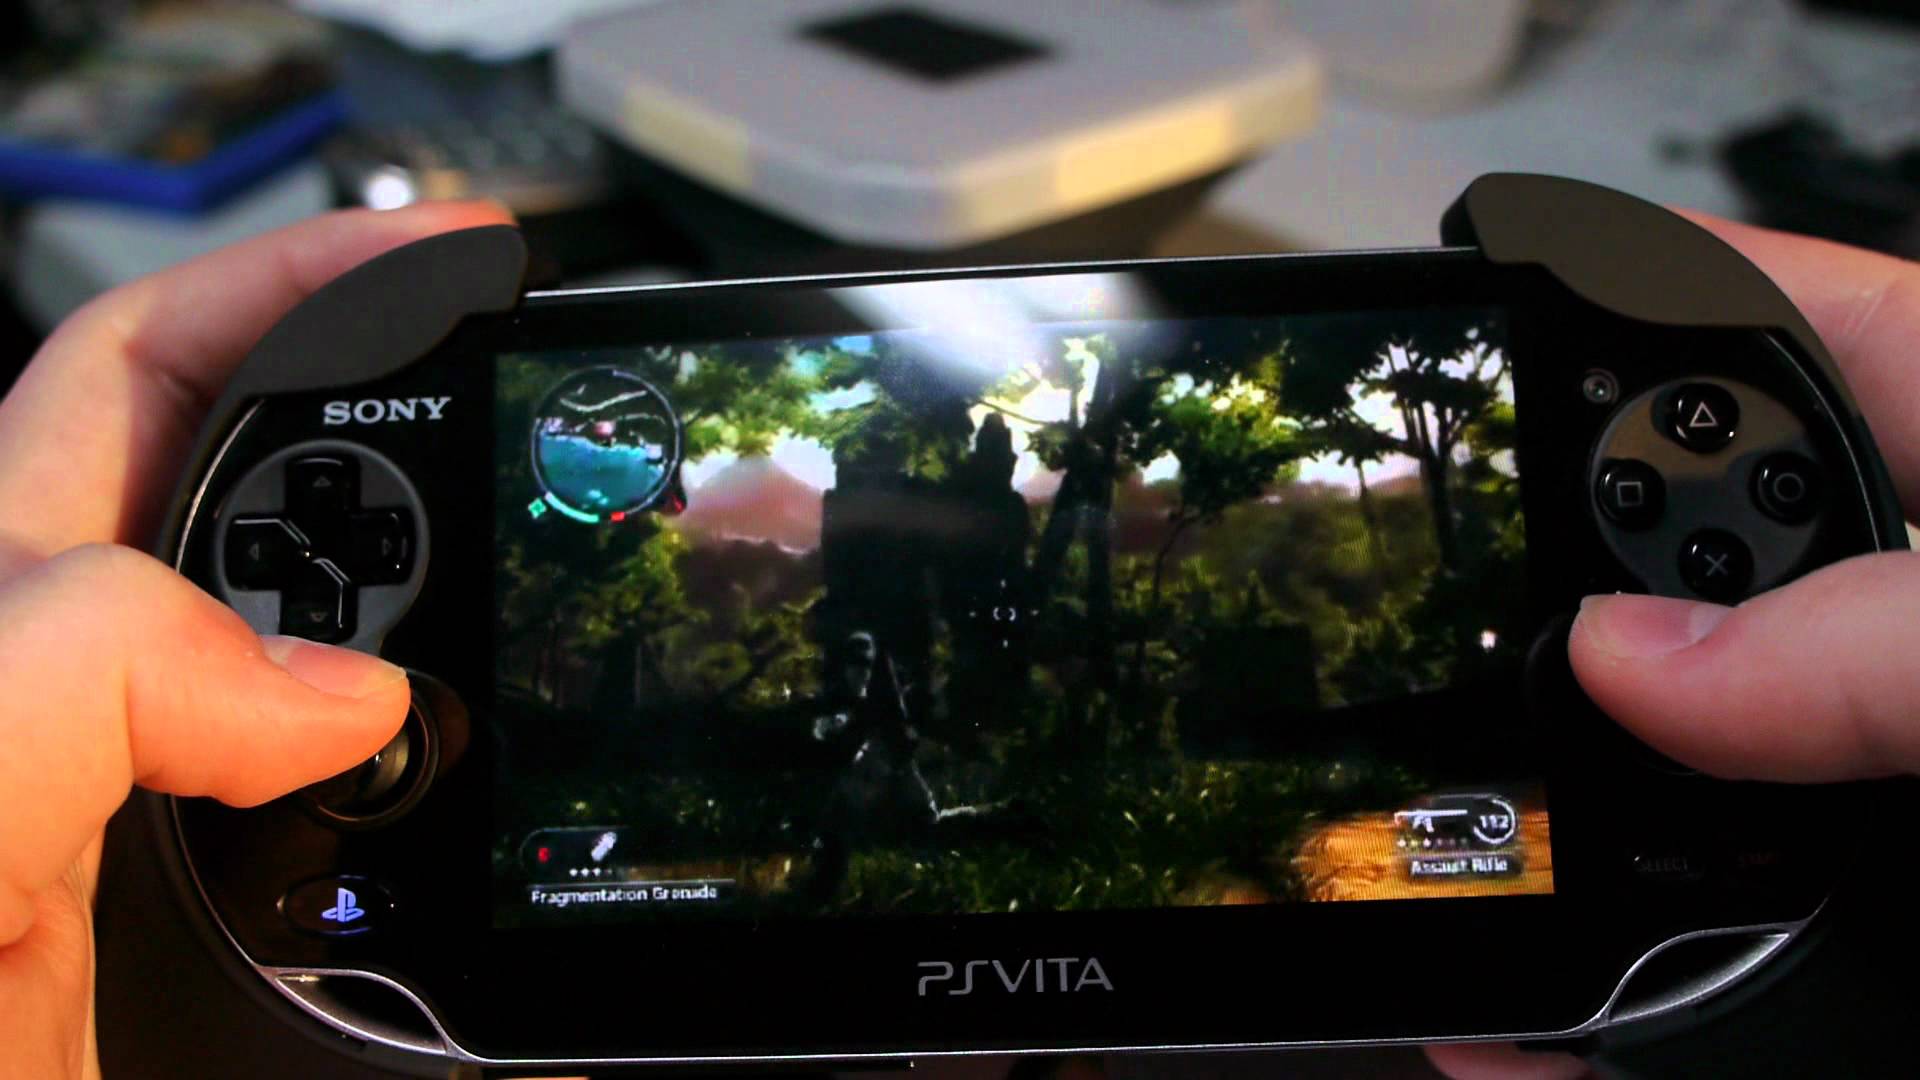 Just Cause 2 Playstation Vita 1080p HD 3.55CFW remote play